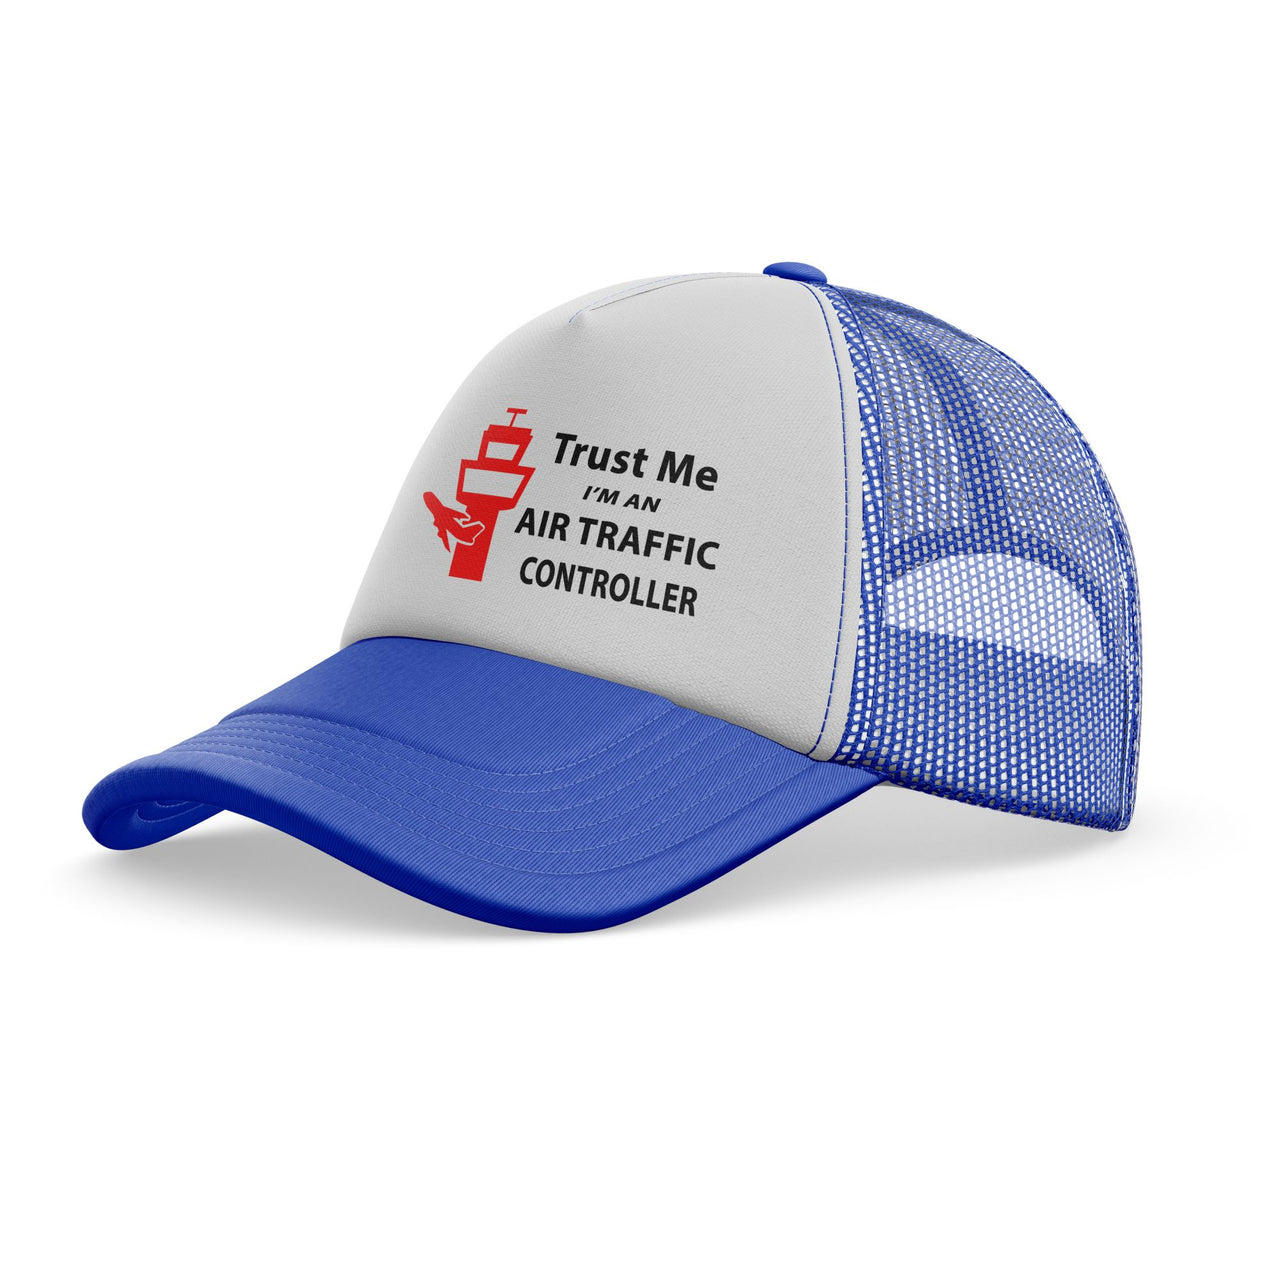 Trust Me I'm an Air Traffic Controller Designed Trucker Caps & Hats